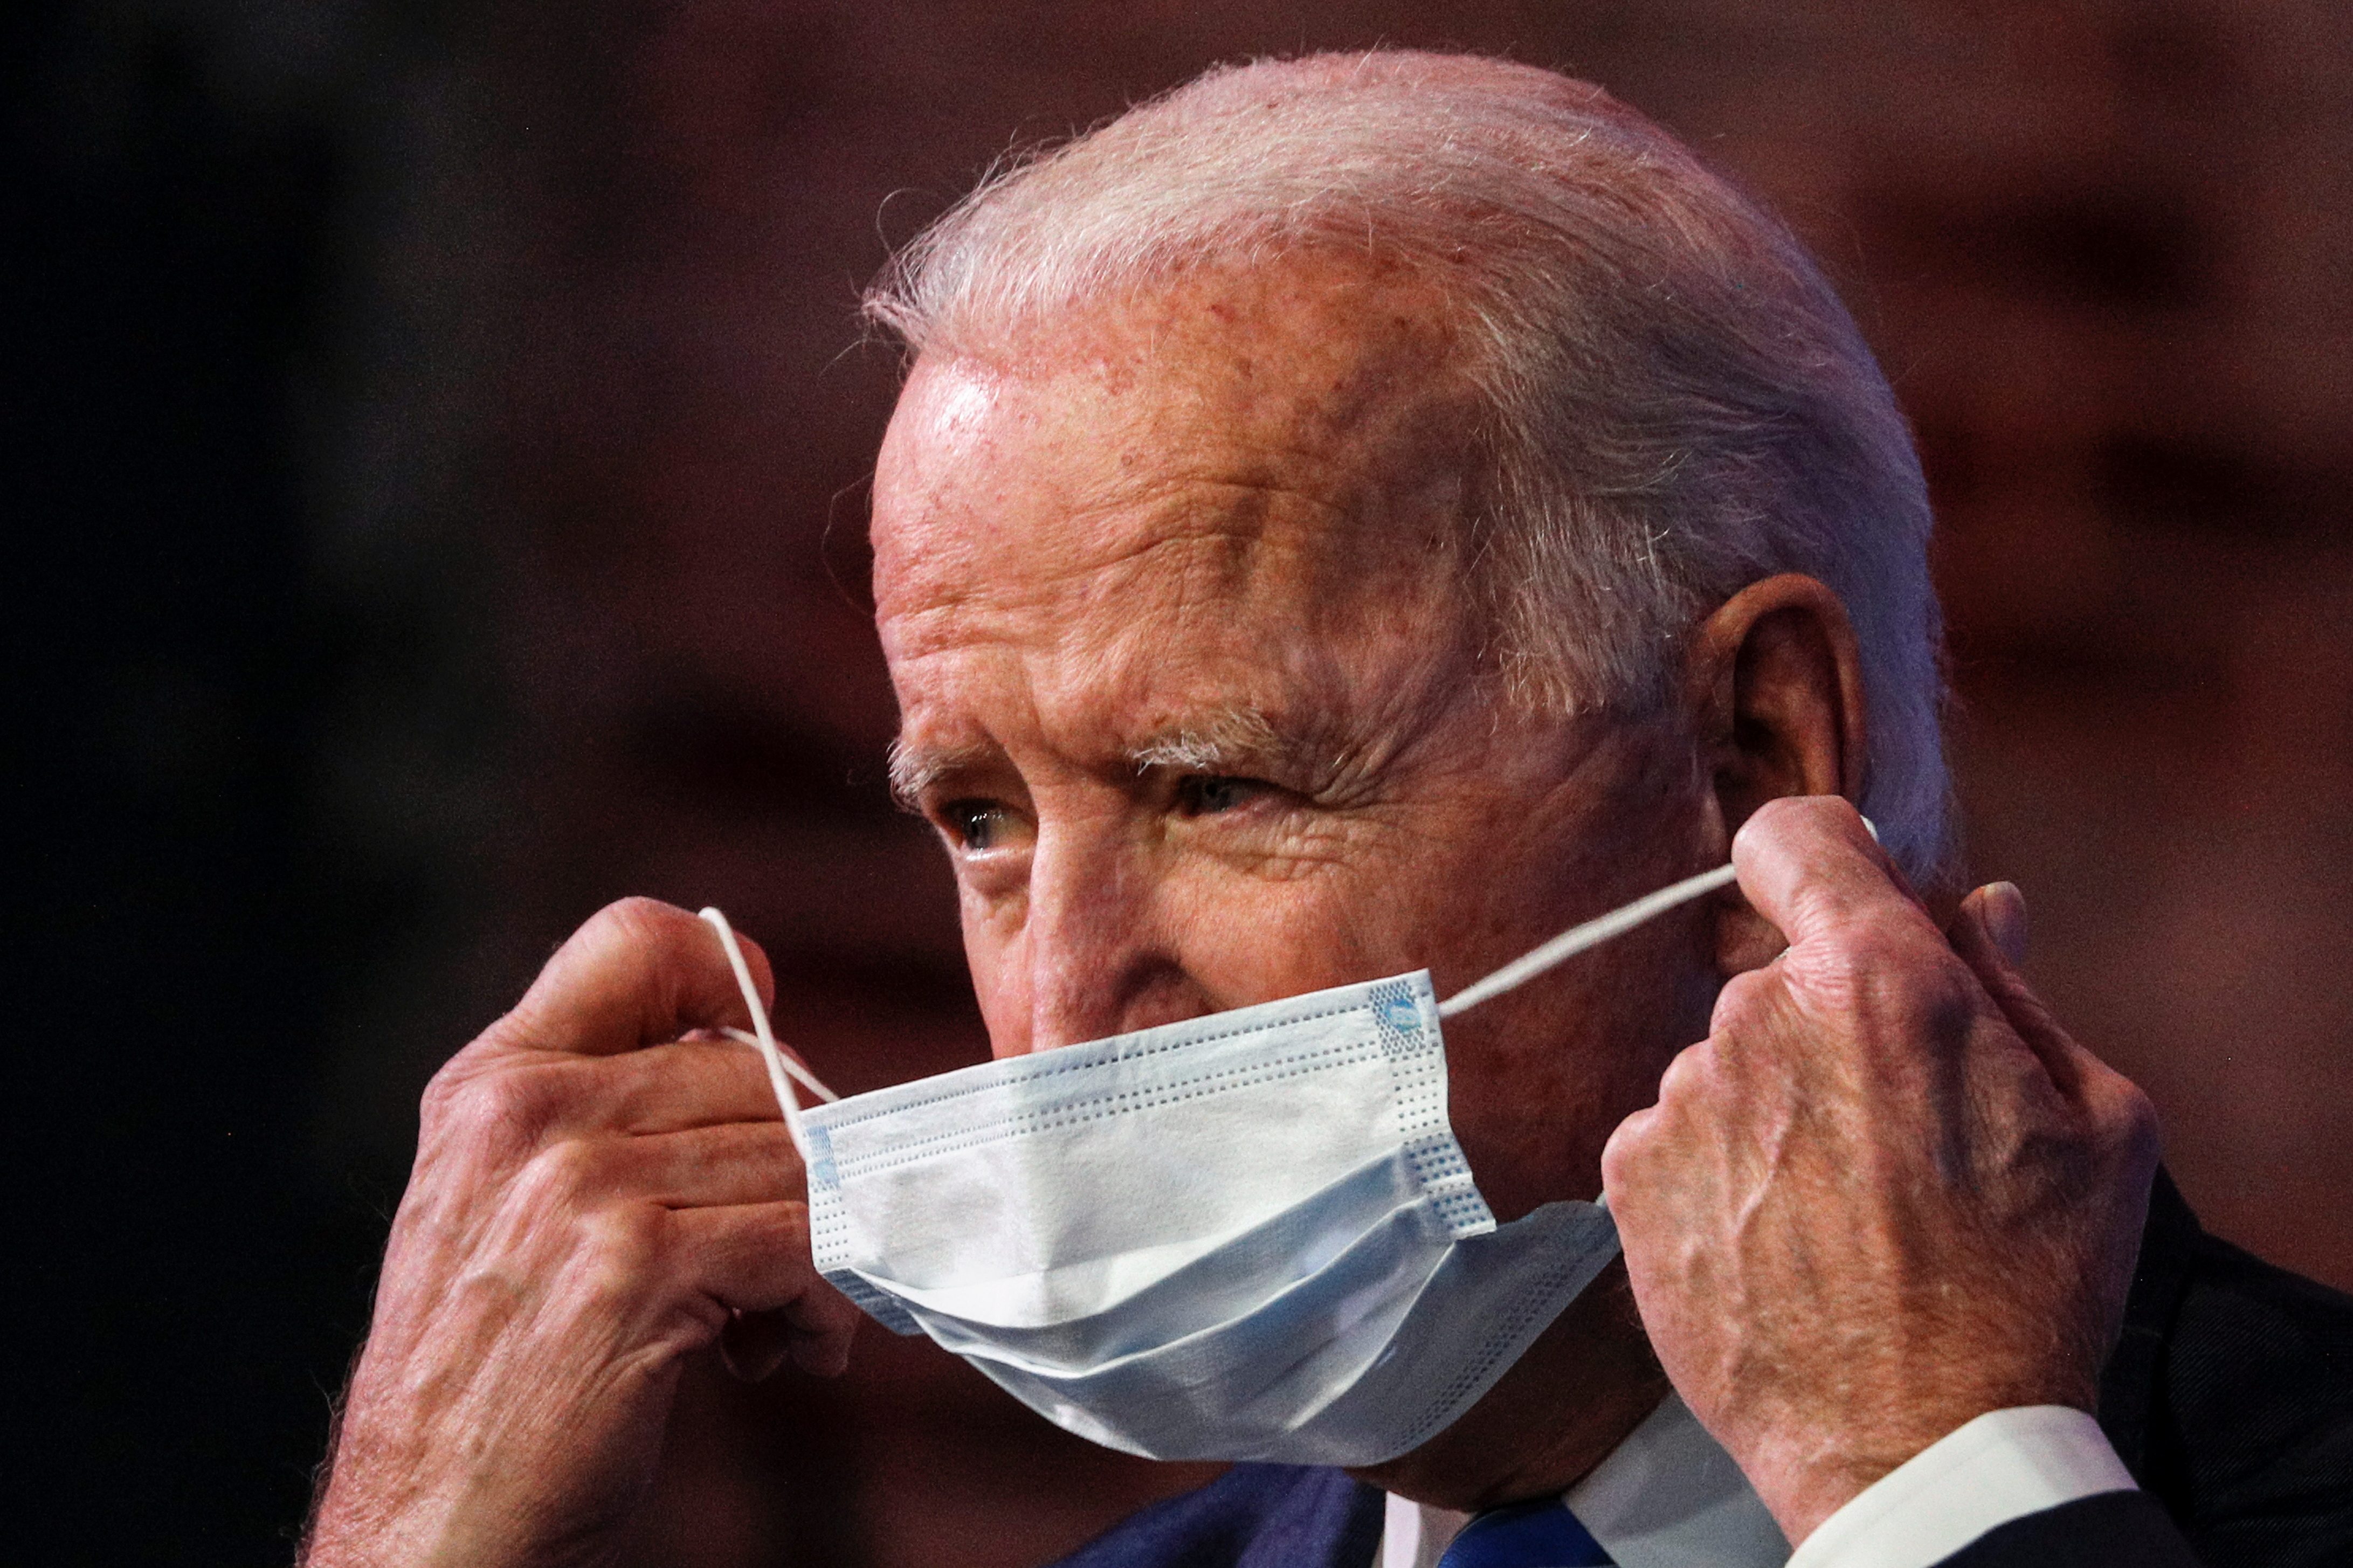 Biden issues orders requiring masks in federal buildings